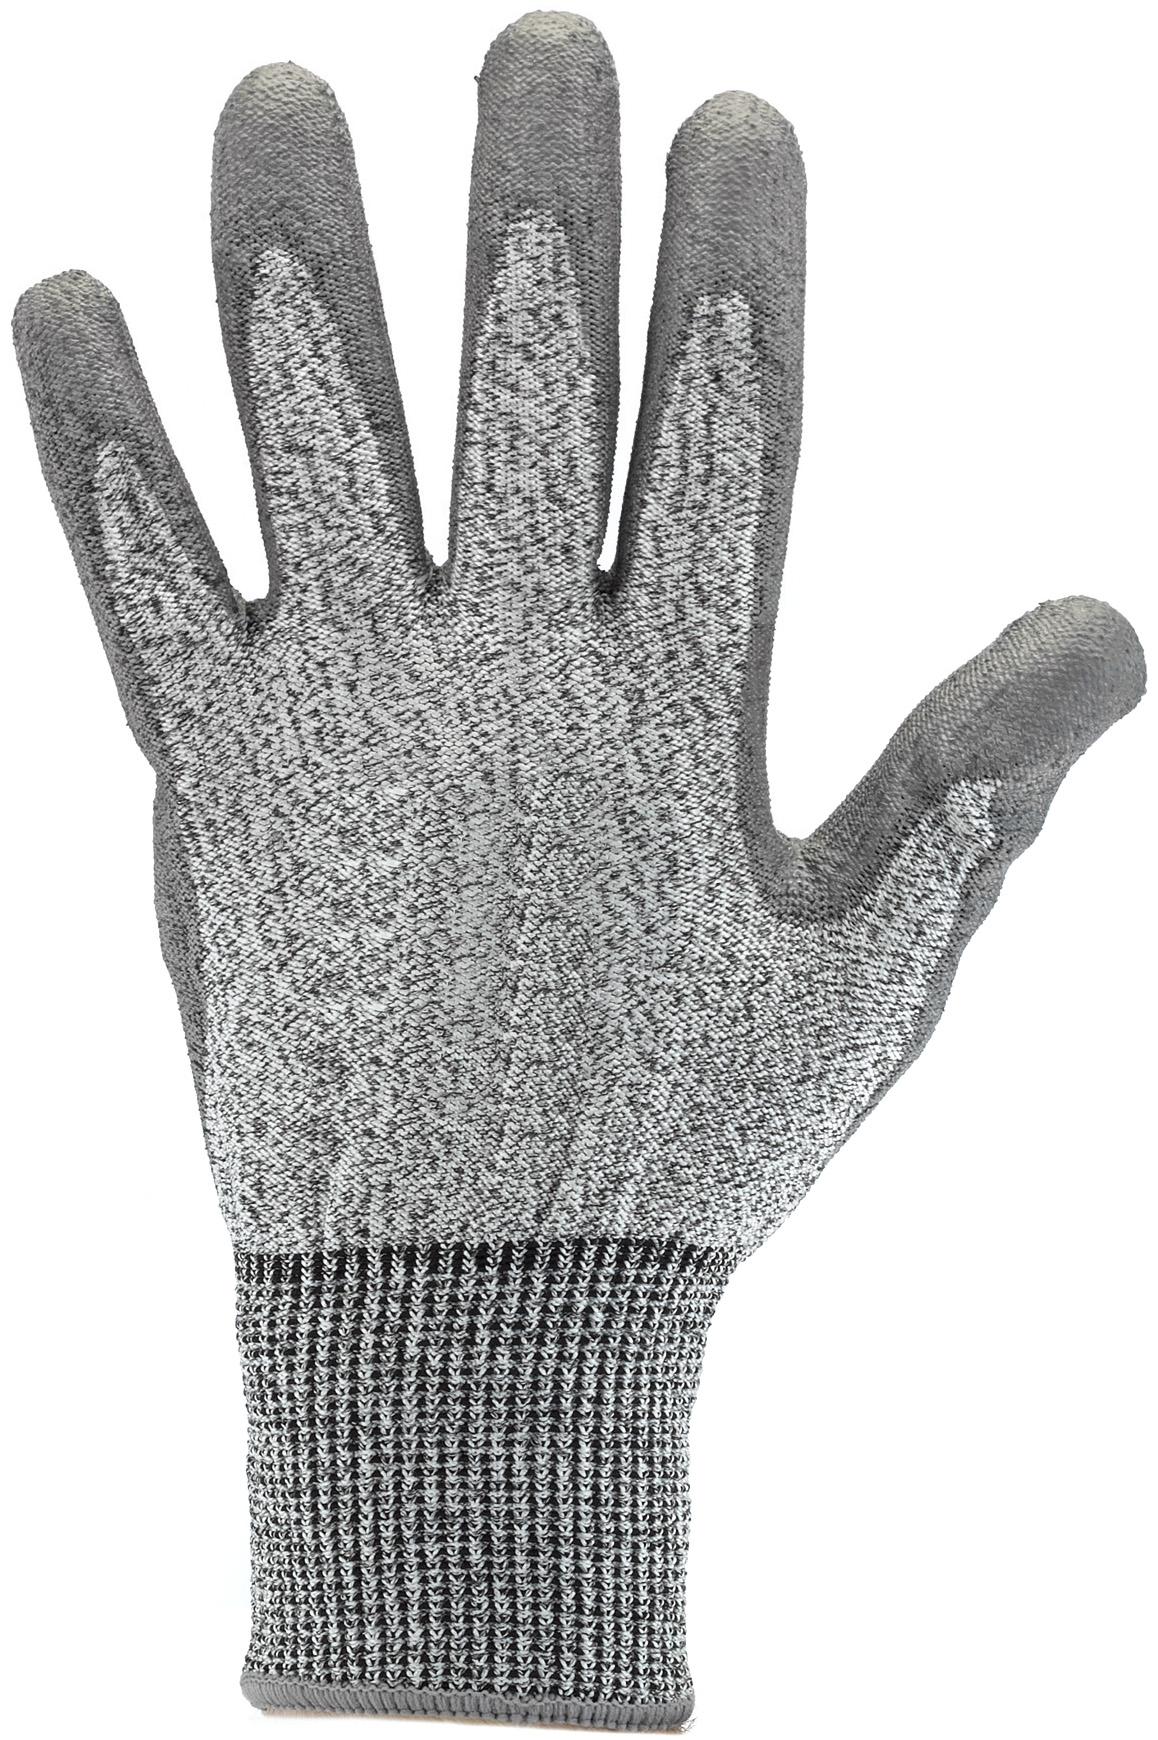 Draper Level 5 Cut Resistant Gloves - Large